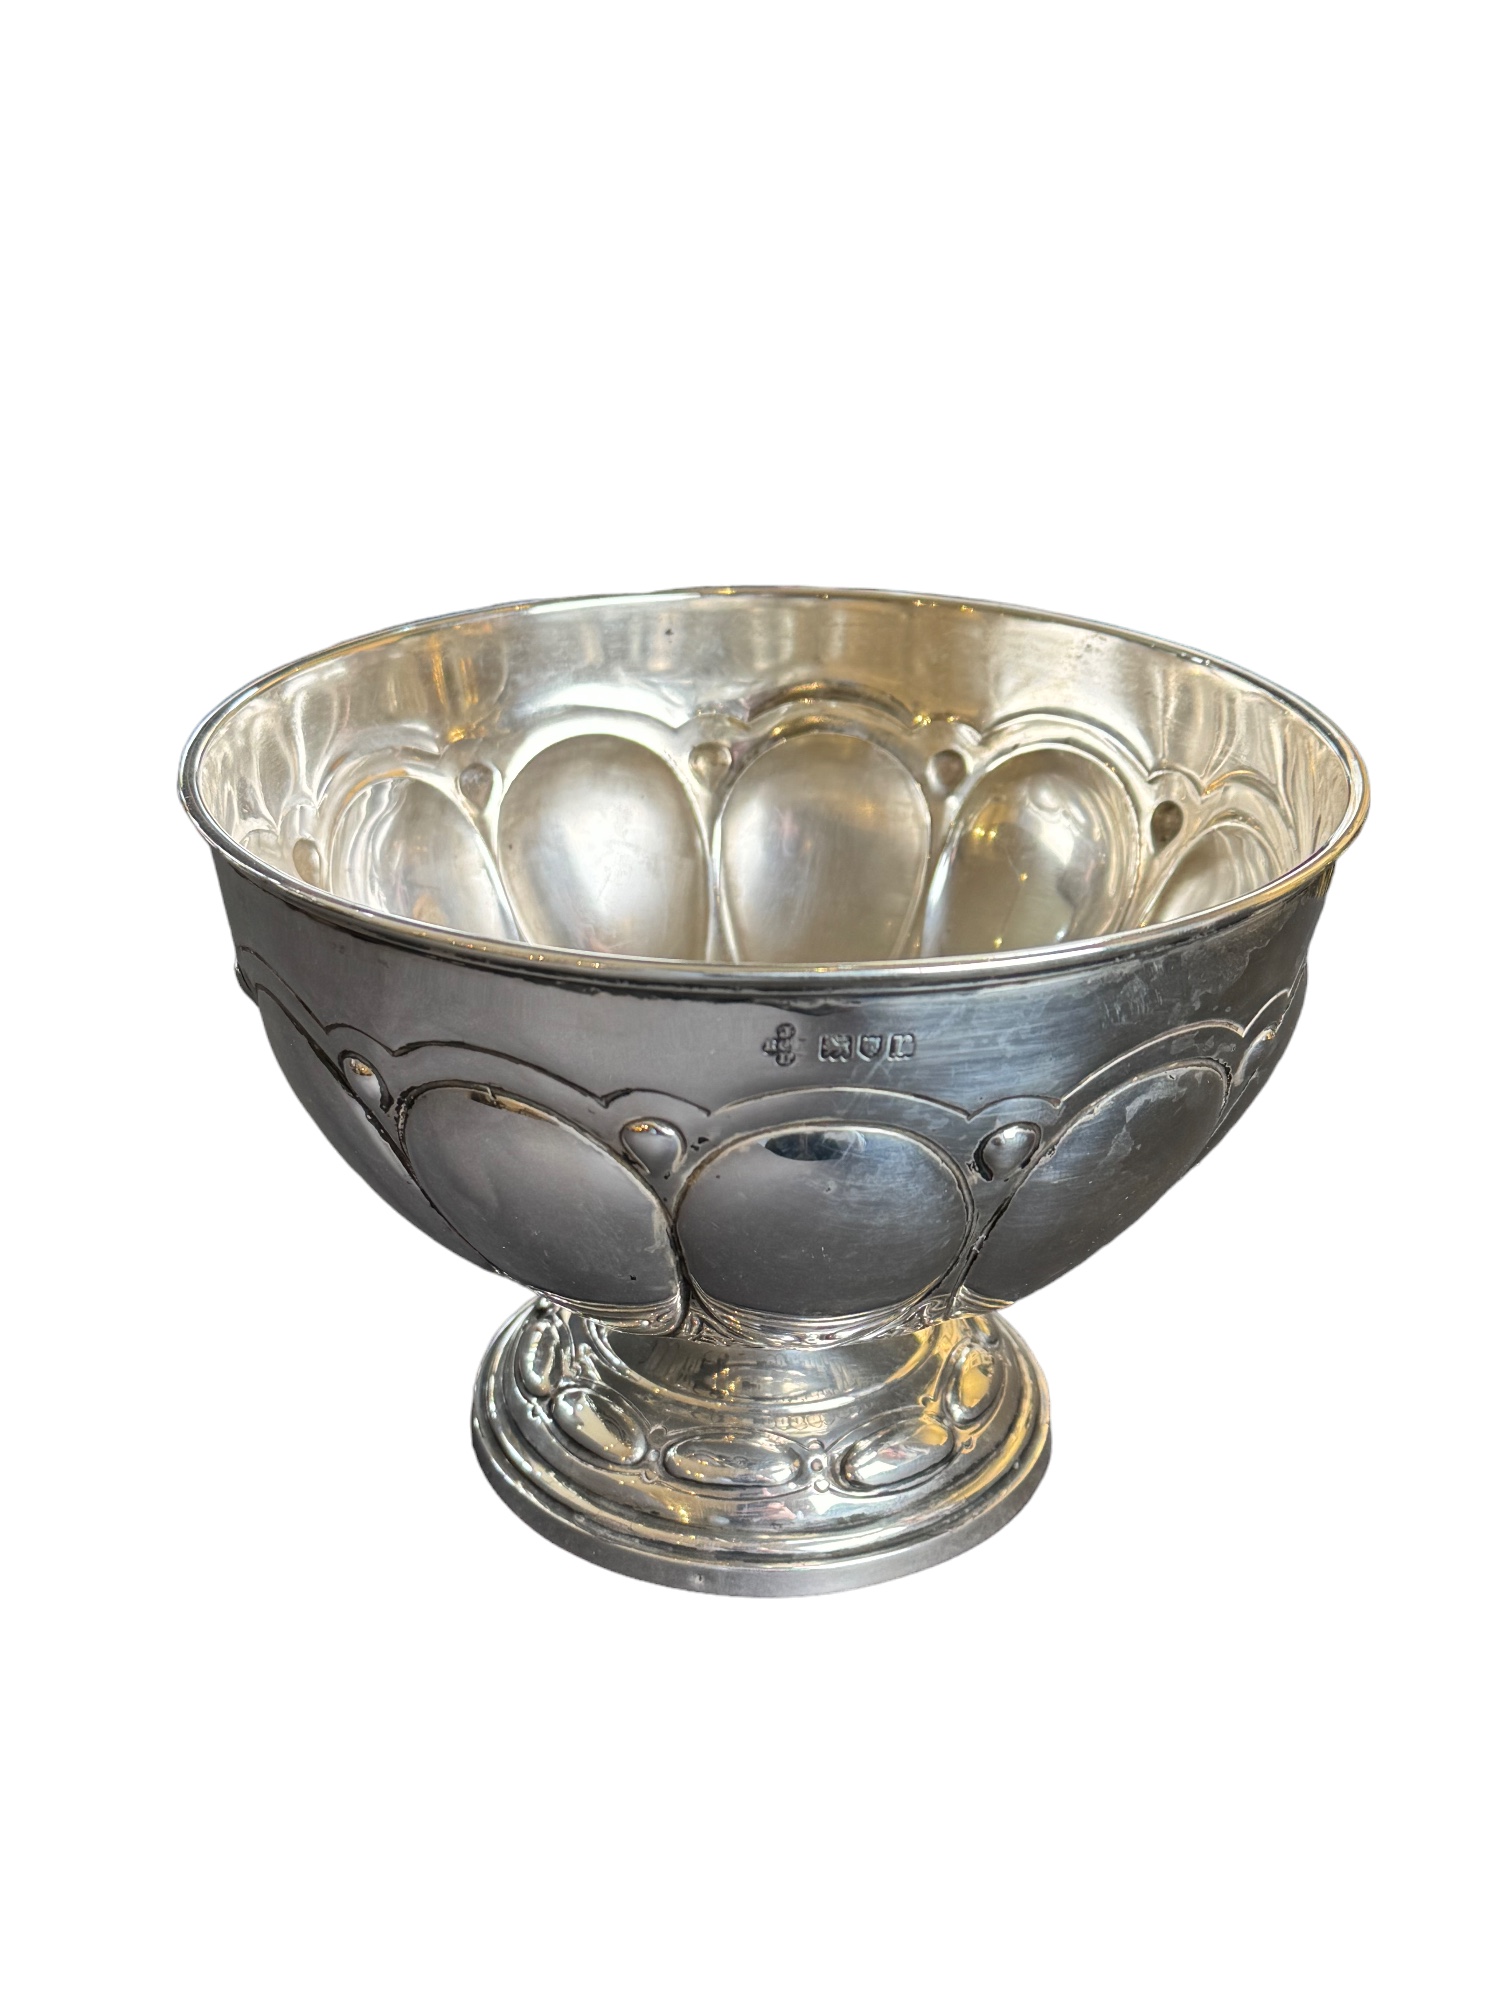 British, Richard Attenborough, An Arts and Crafts silver bowl